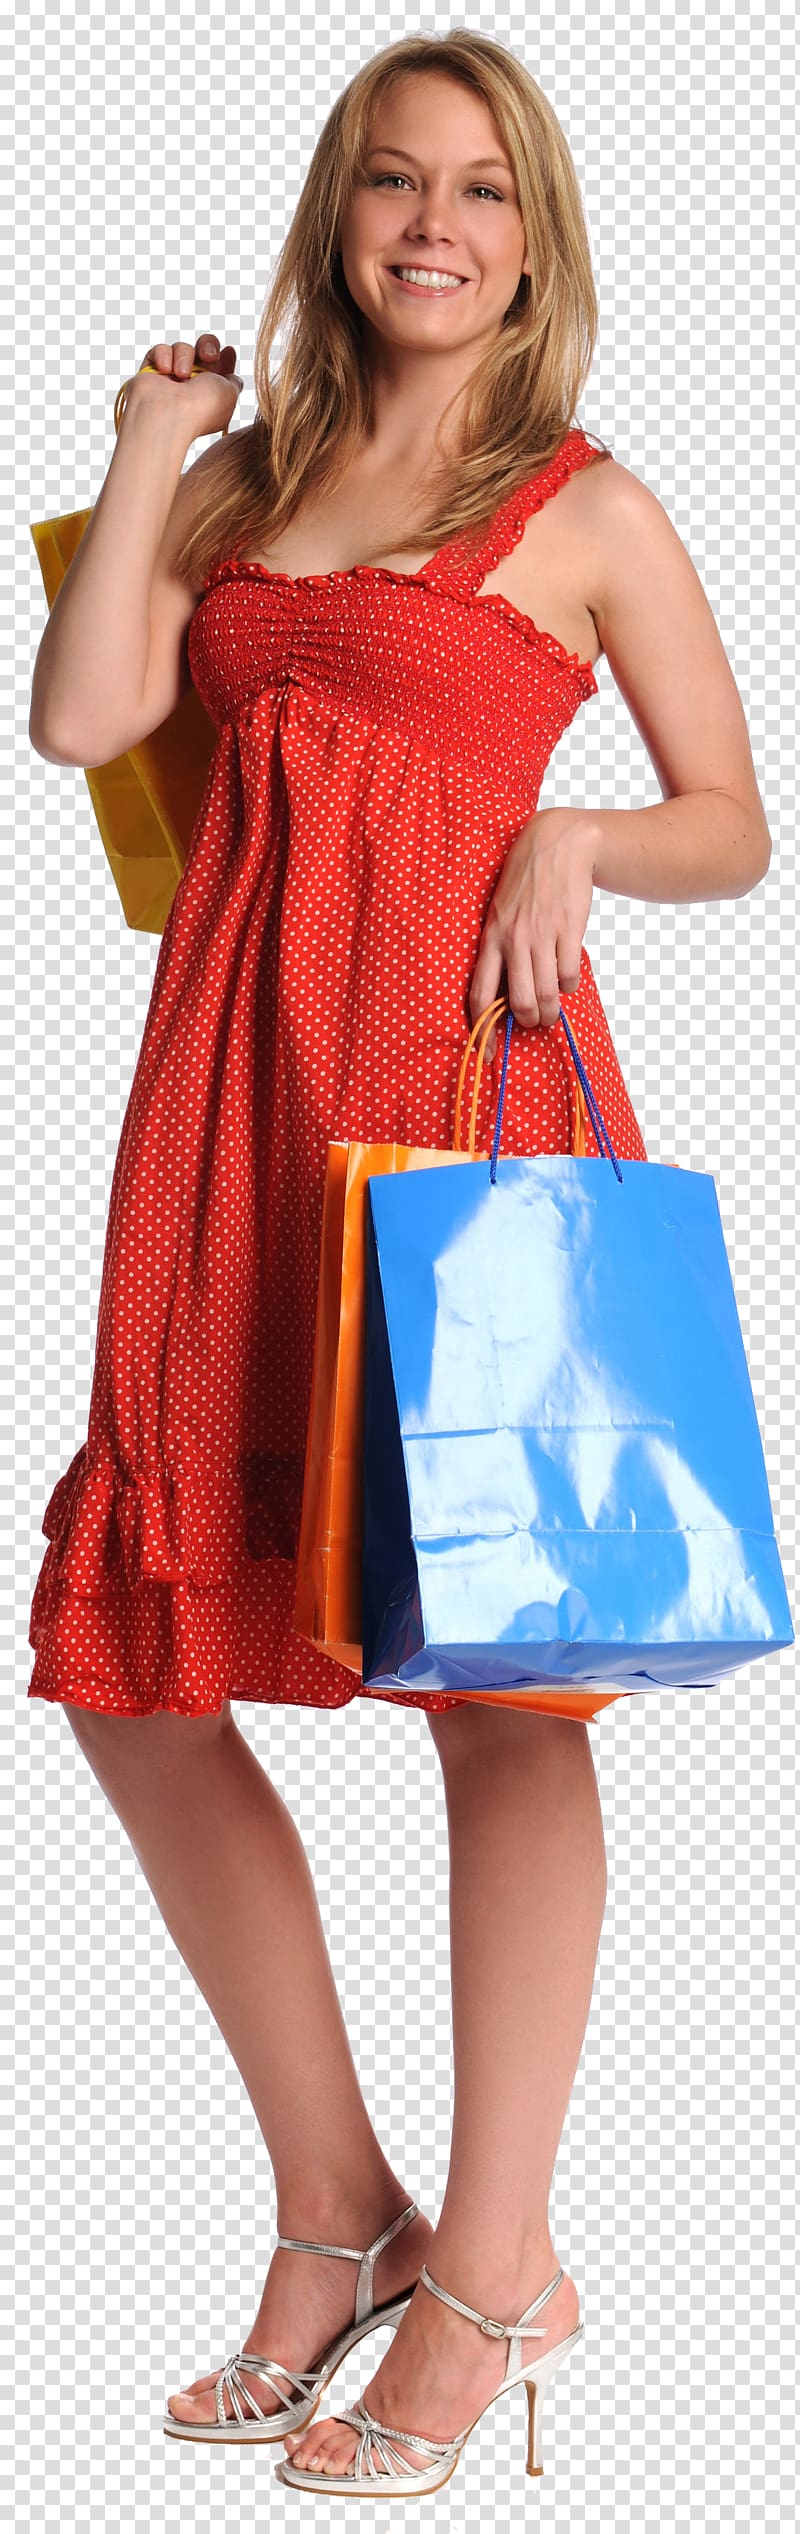 Personal Shopper, drawing, shopping, fashion, silhouette, girl